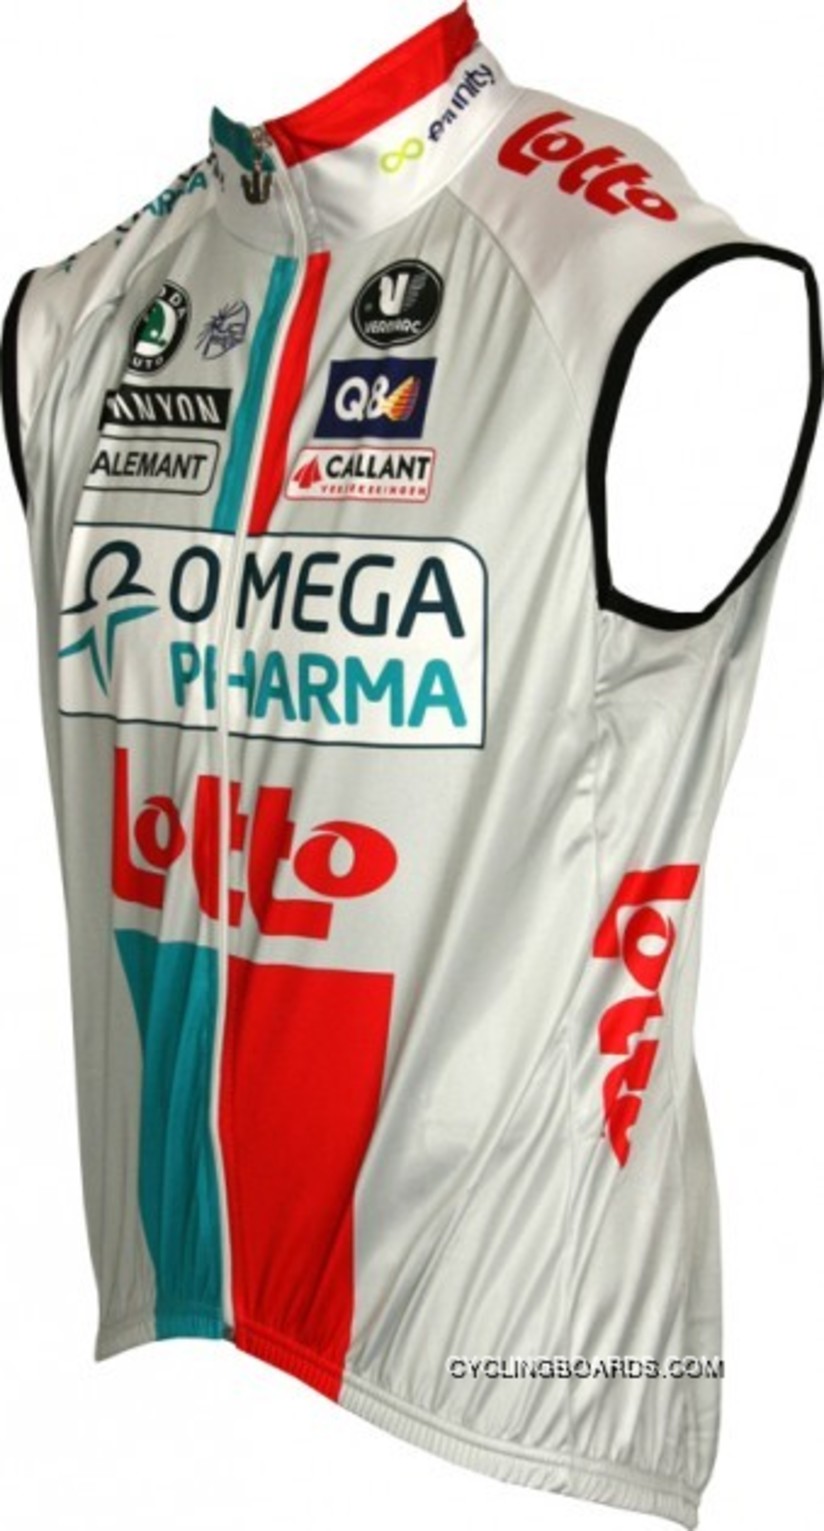 OMEGA PHARMA-LOTTO 2011 Vermarc Radsport-Profi-Team- Sleeveless Jersey Vest Coupon